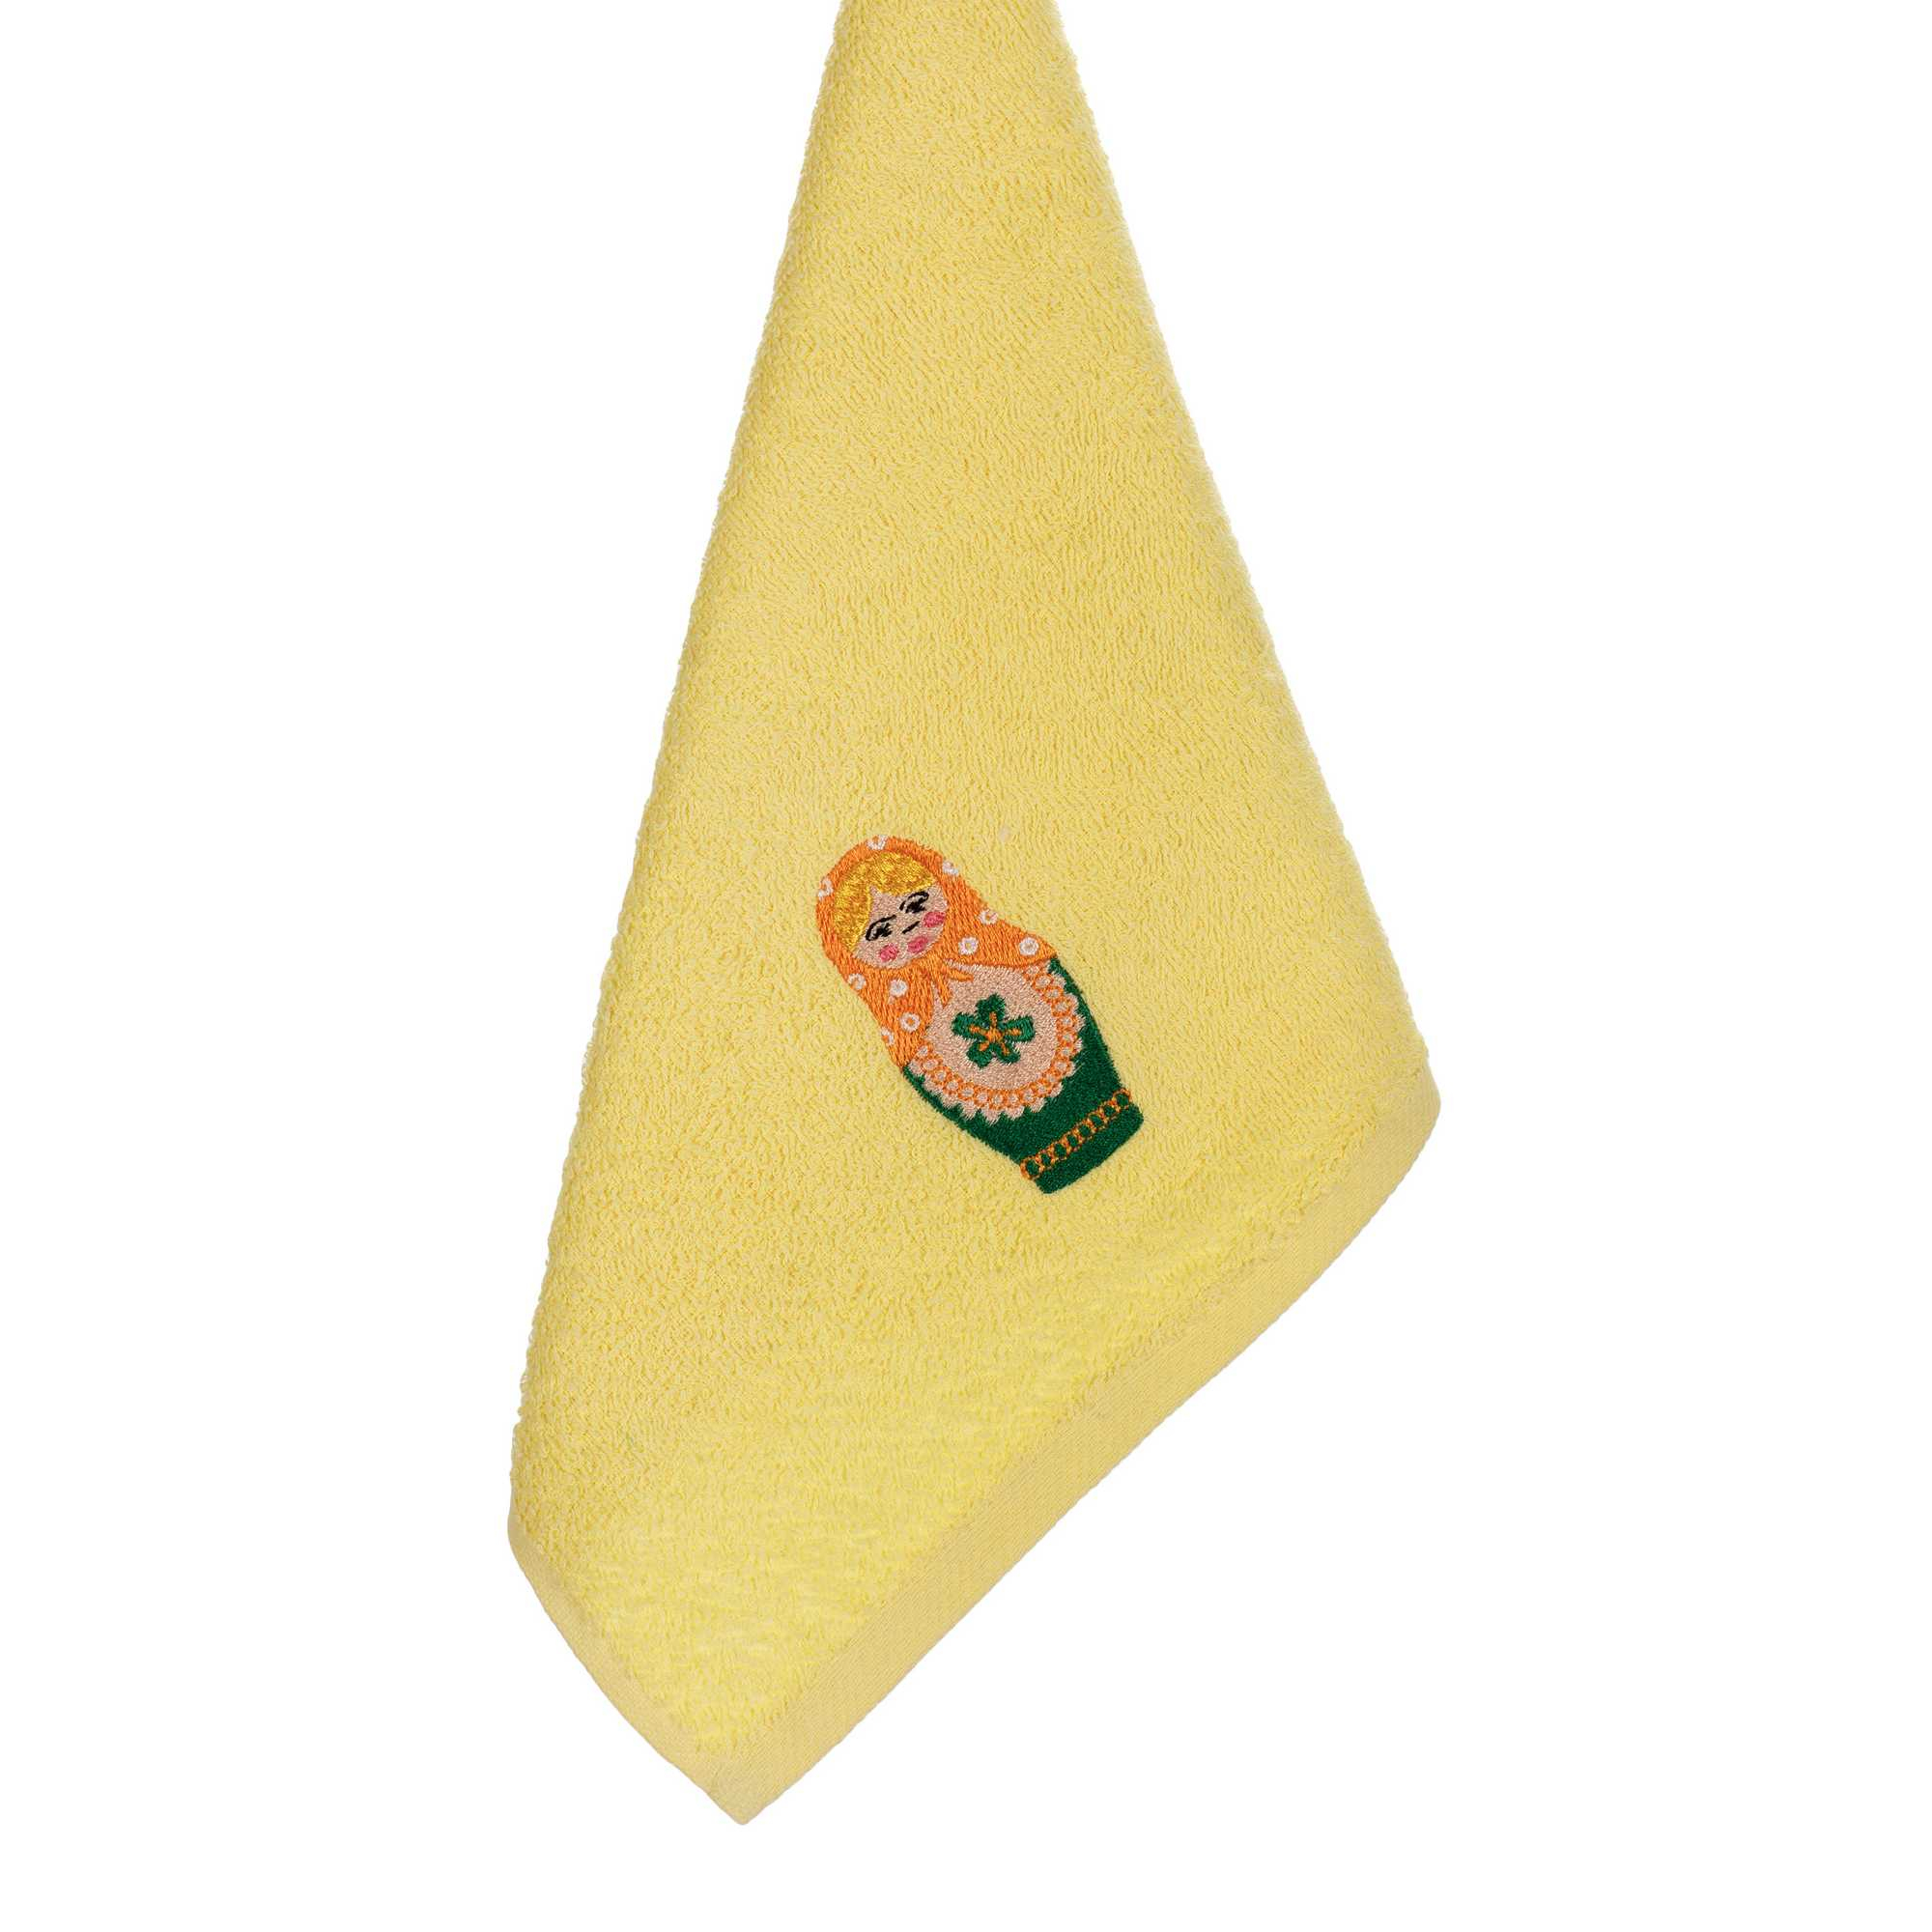 Кухонное полотенце Матрешка цвет: желтый (30х50 см), размер 30х50 см daf933316 Кухонное полотенце Матрешка цвет: желтый (30х50 см) - фото 1